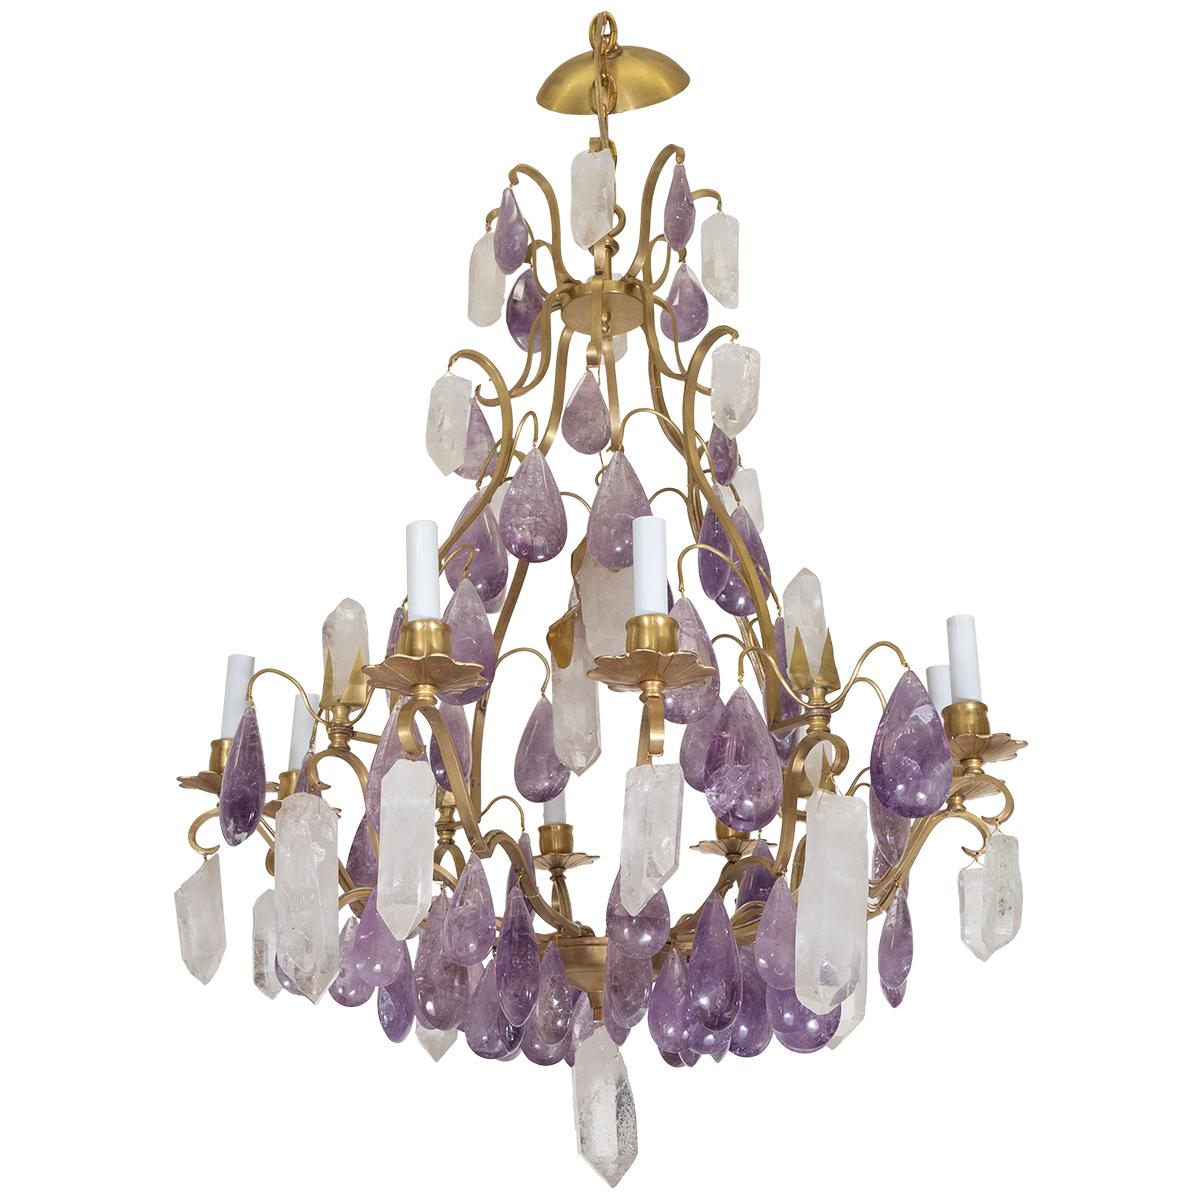 Vintage brass chandelier frame restored with custom polished amethyst and rock crystal drop elements.